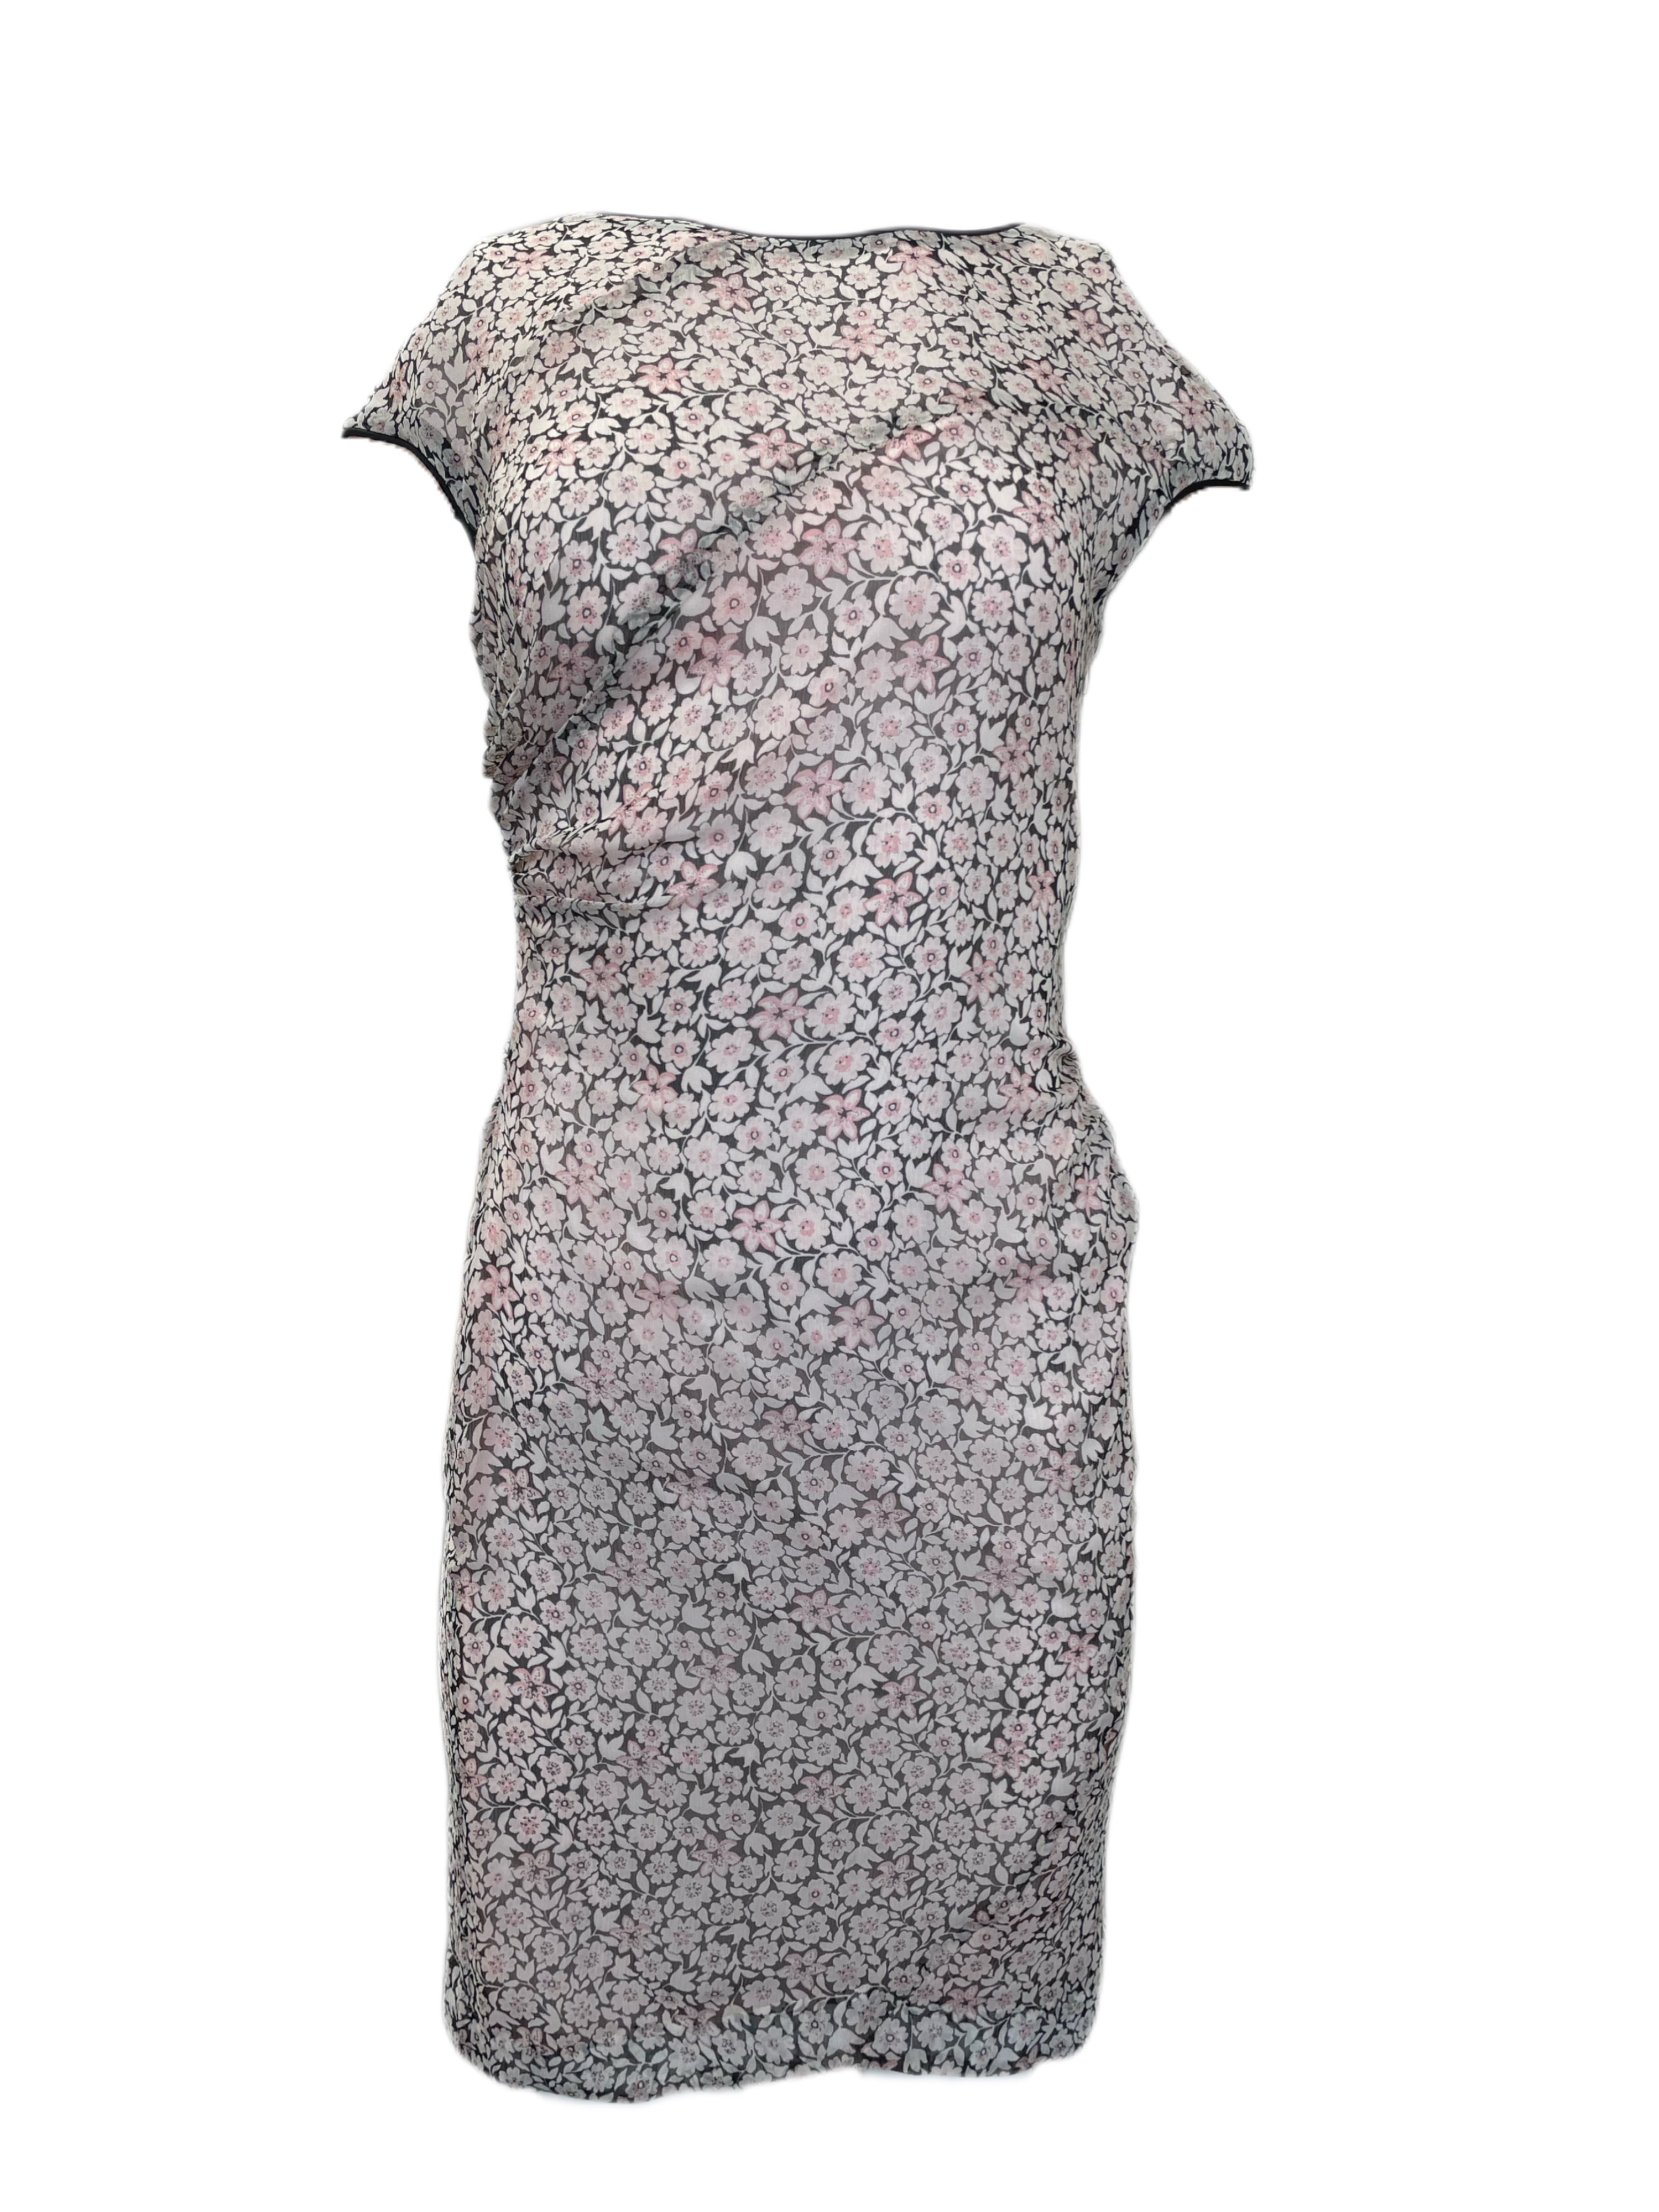 ANNE LEMAN Women's Floral Blossom Ruched Chrysanta Dress SP92DR10 Size ...